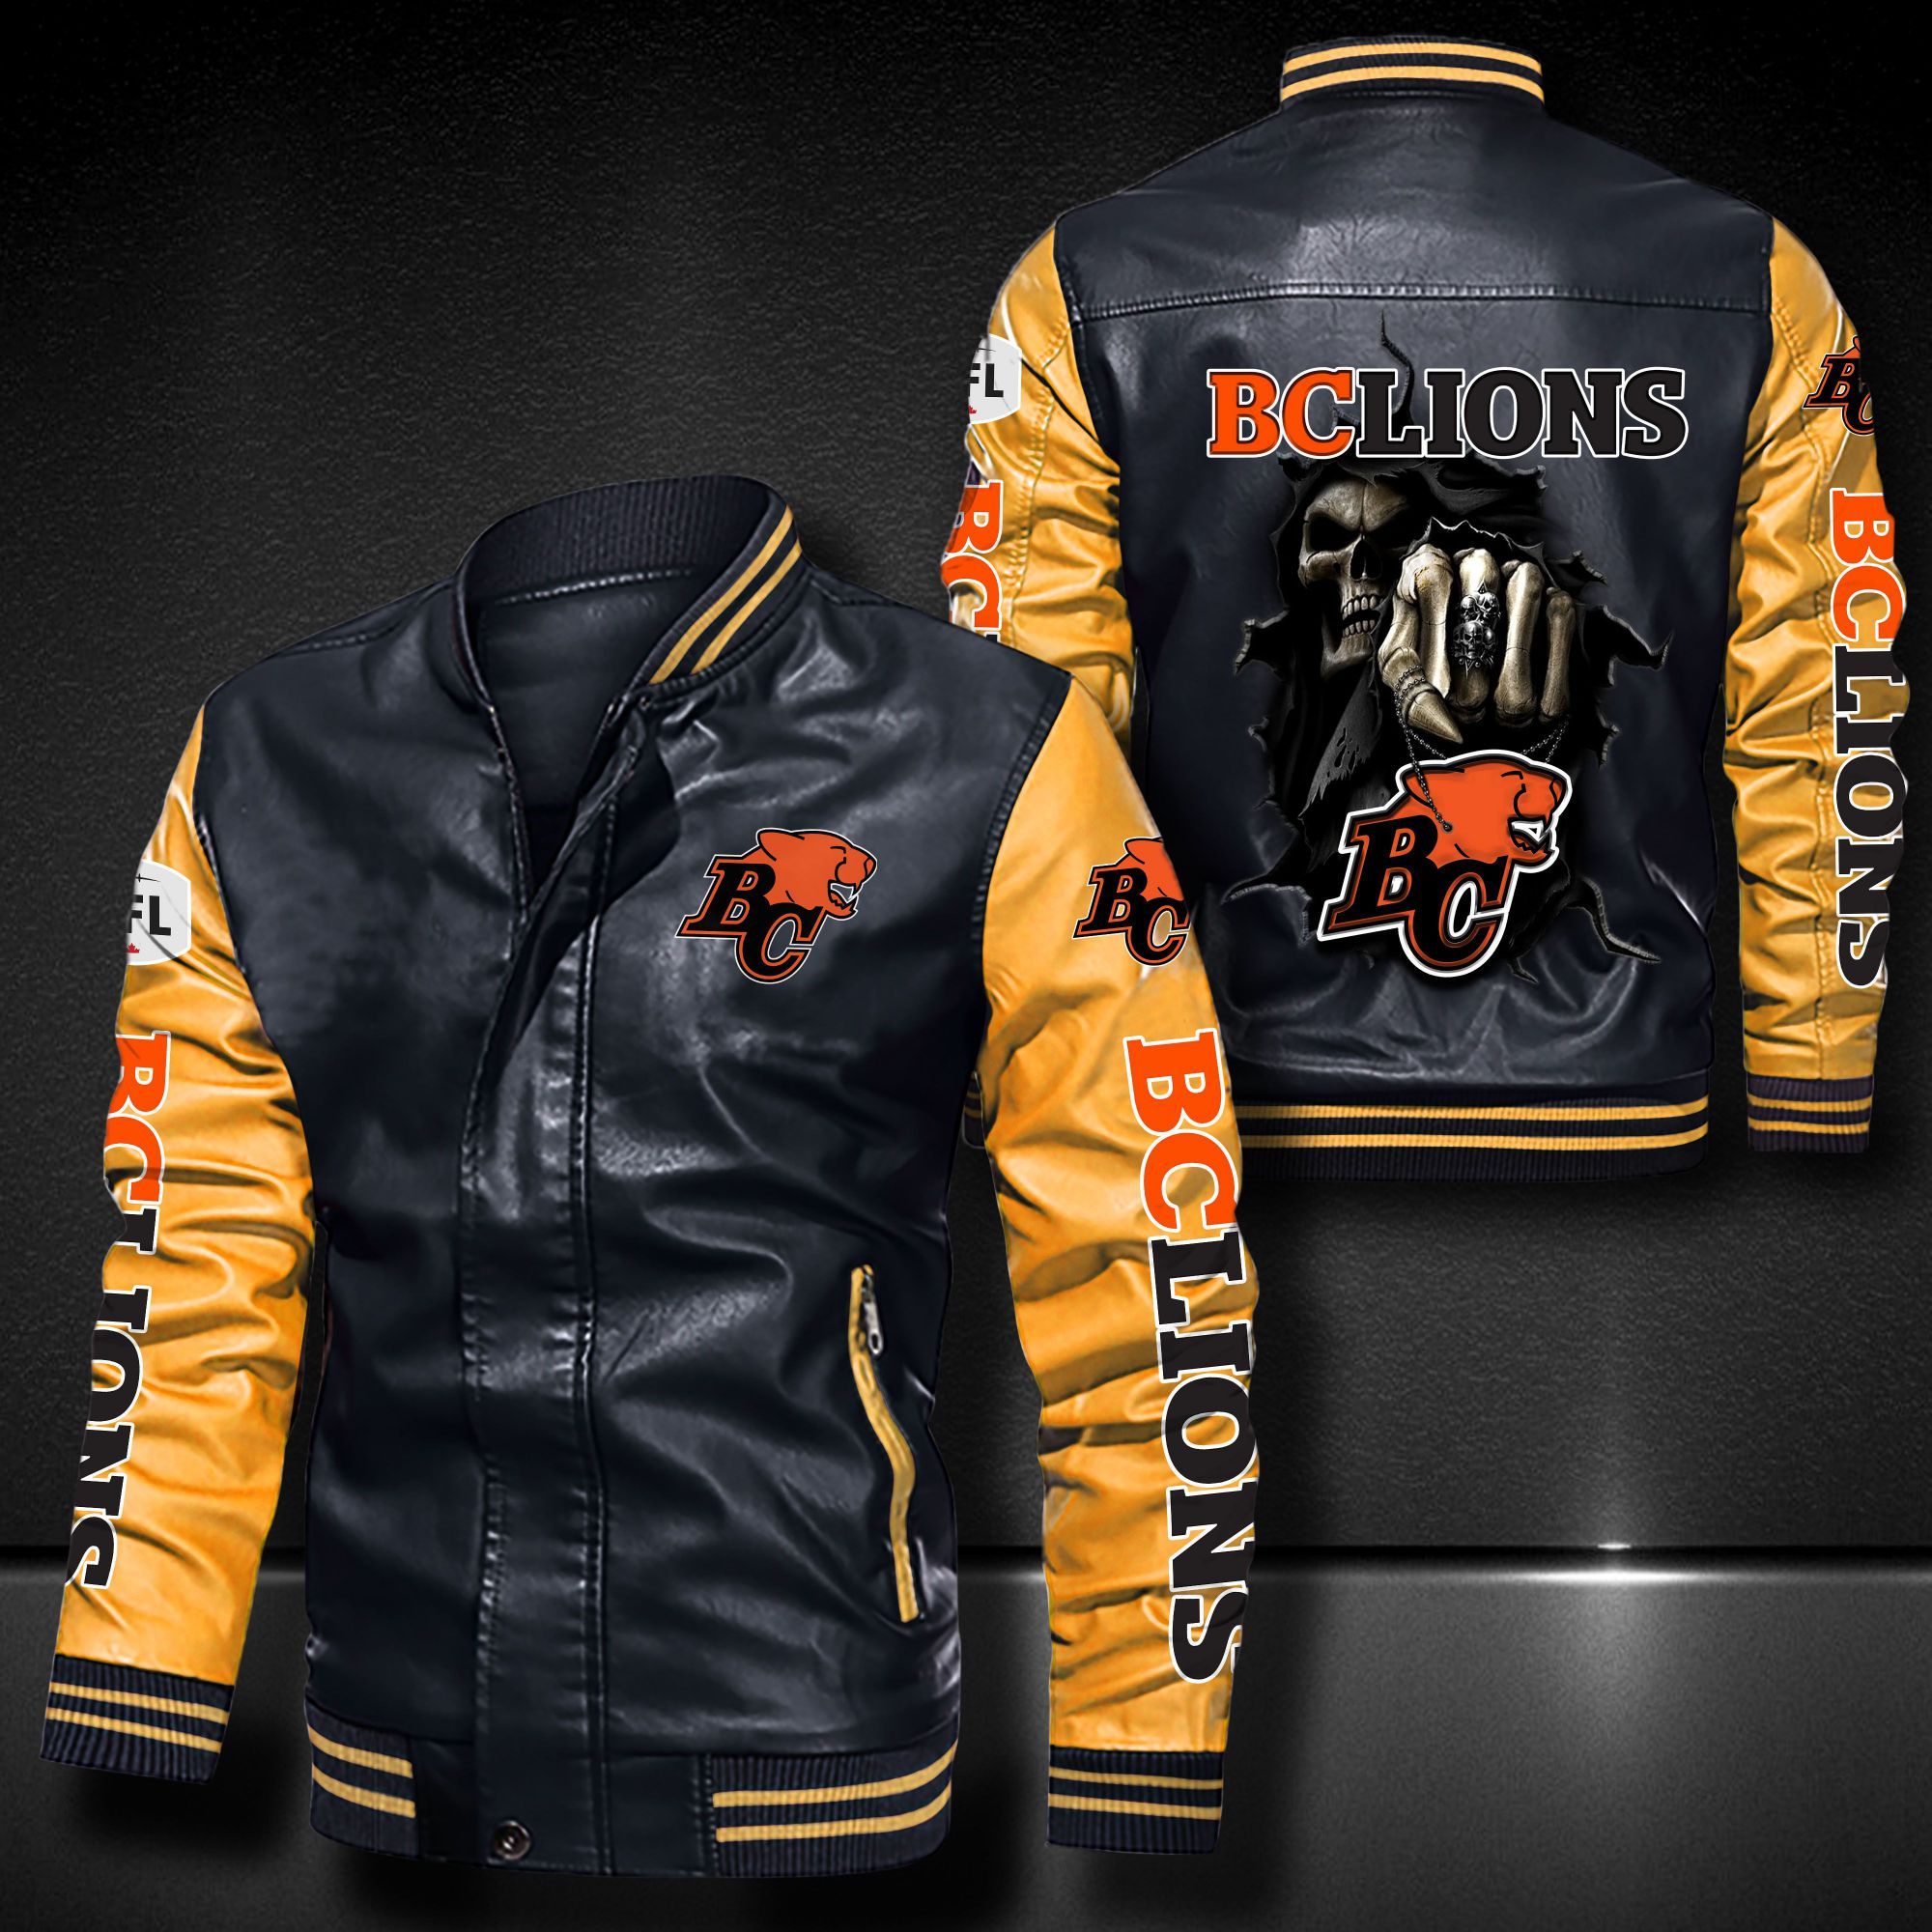 BC Lions Leather Bomber Jacket 9009